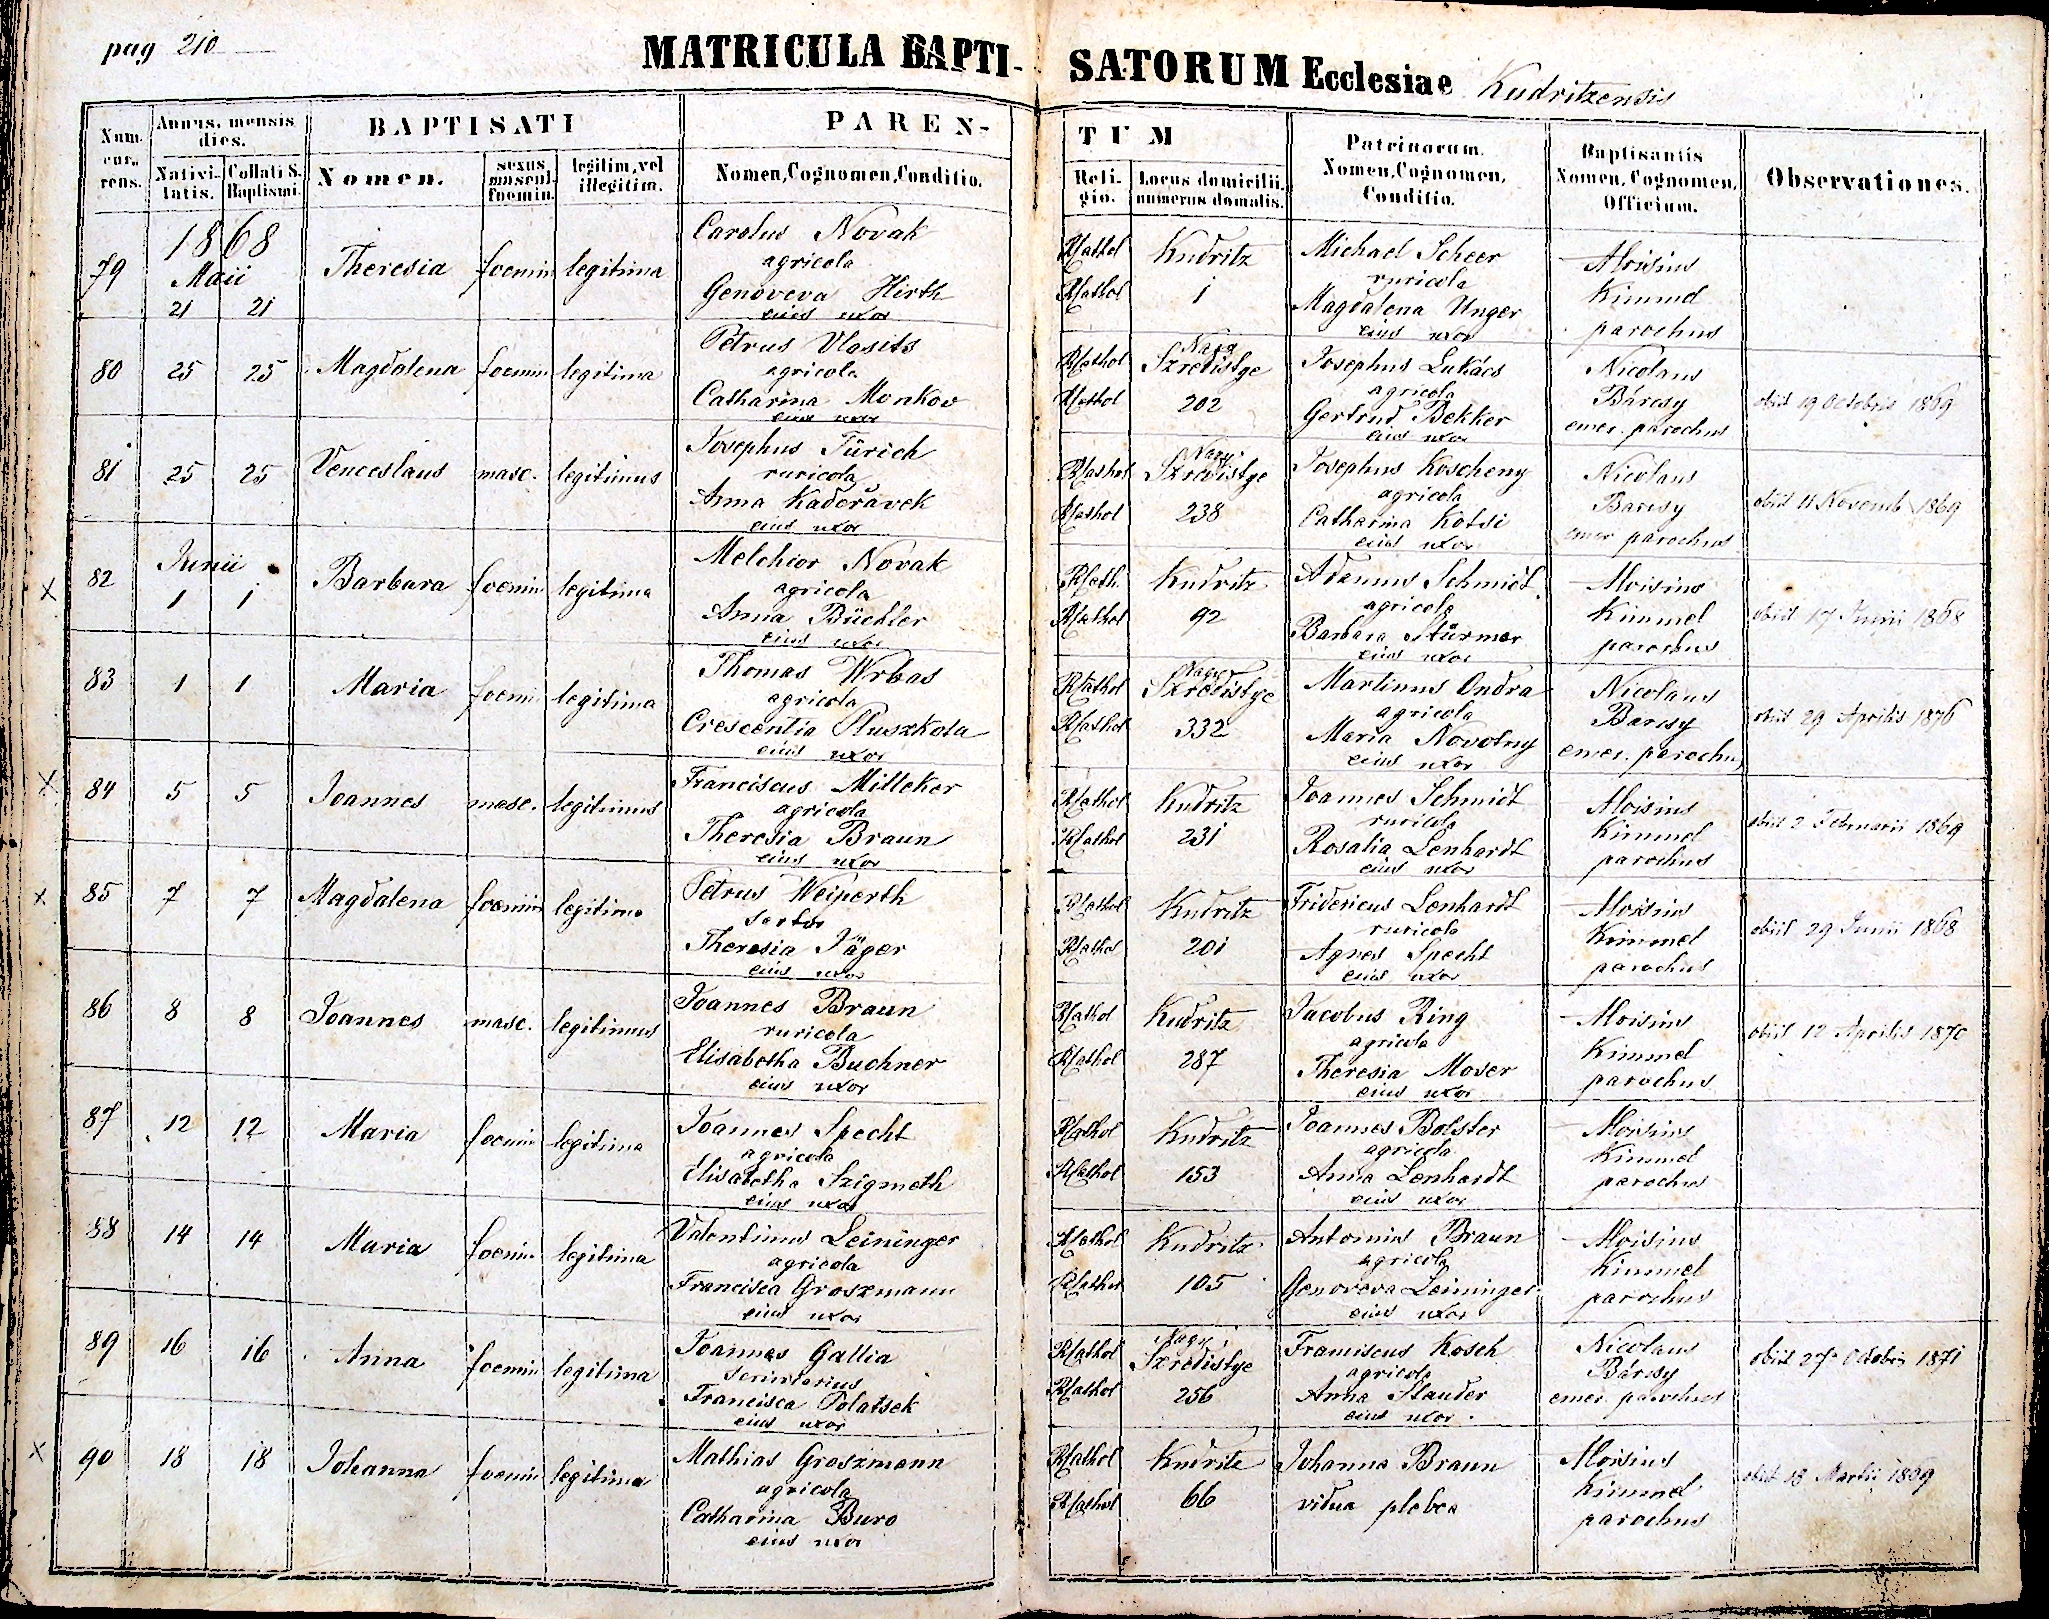 images/church_records/BIRTHS/1852-1870B/210